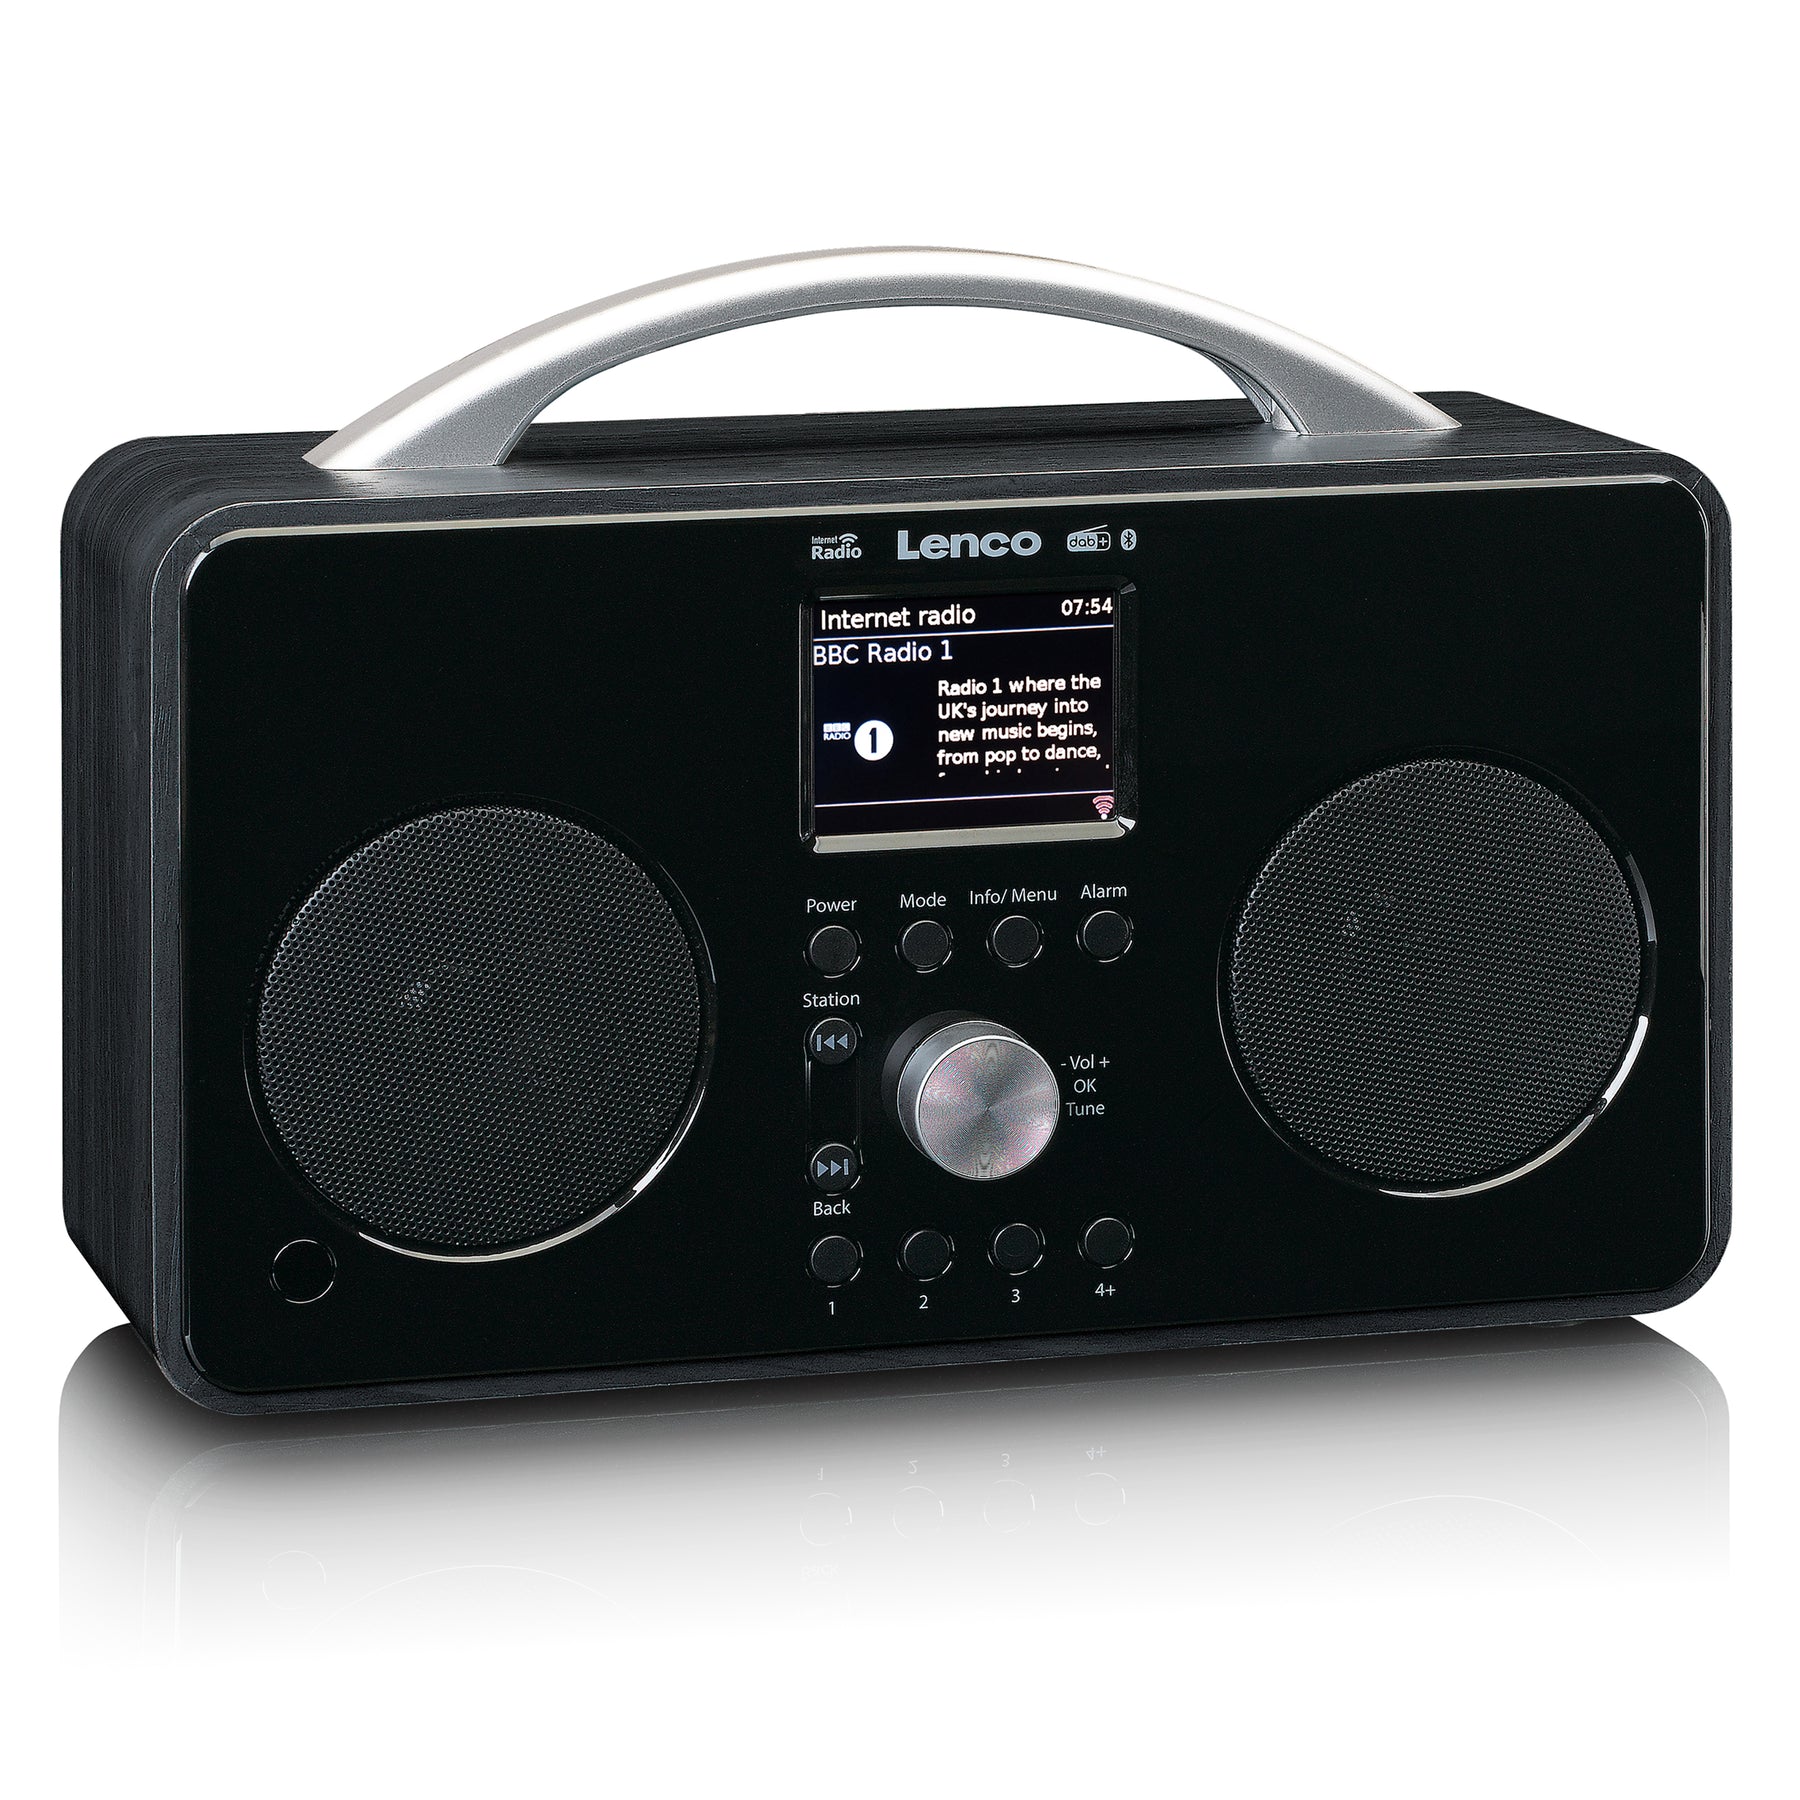 Digital Radio, DAB Plus DAB Radio Player with Bluetooth, FM Radio, 2.4 Inch  Color Screen, Auto Tune, 20 Radio Stations AM FM Radio, Dual Alarm